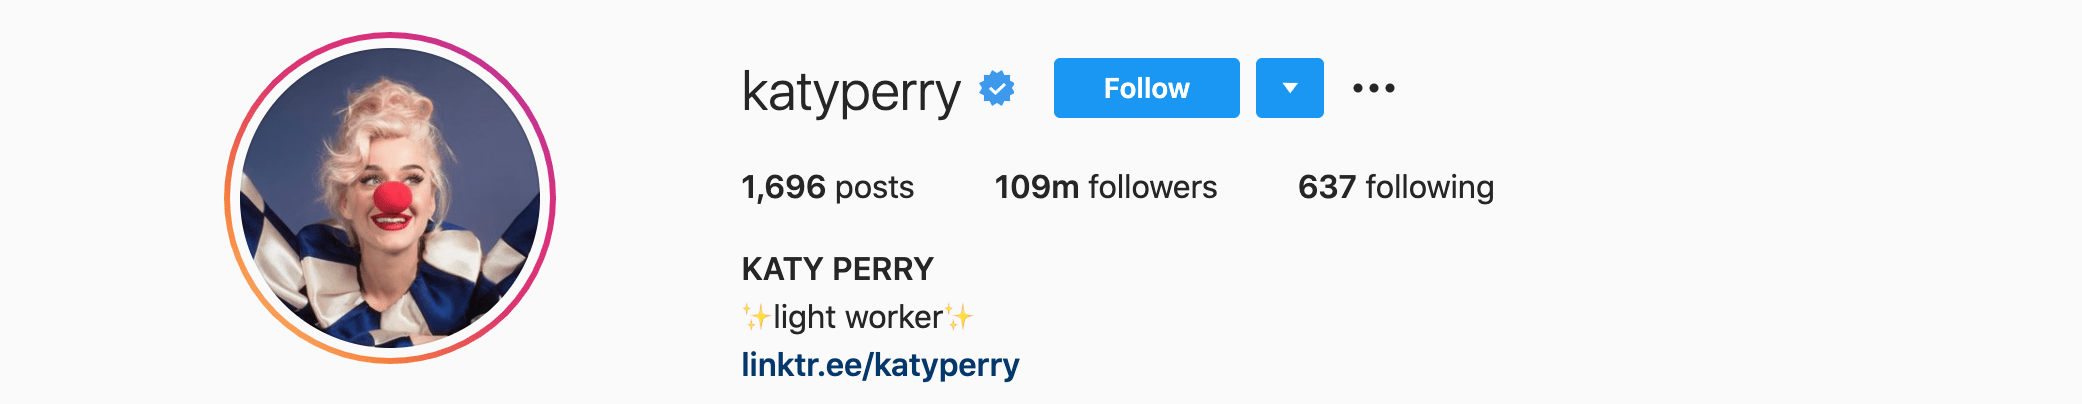 Top Instagram Influencers - KATY PERRY